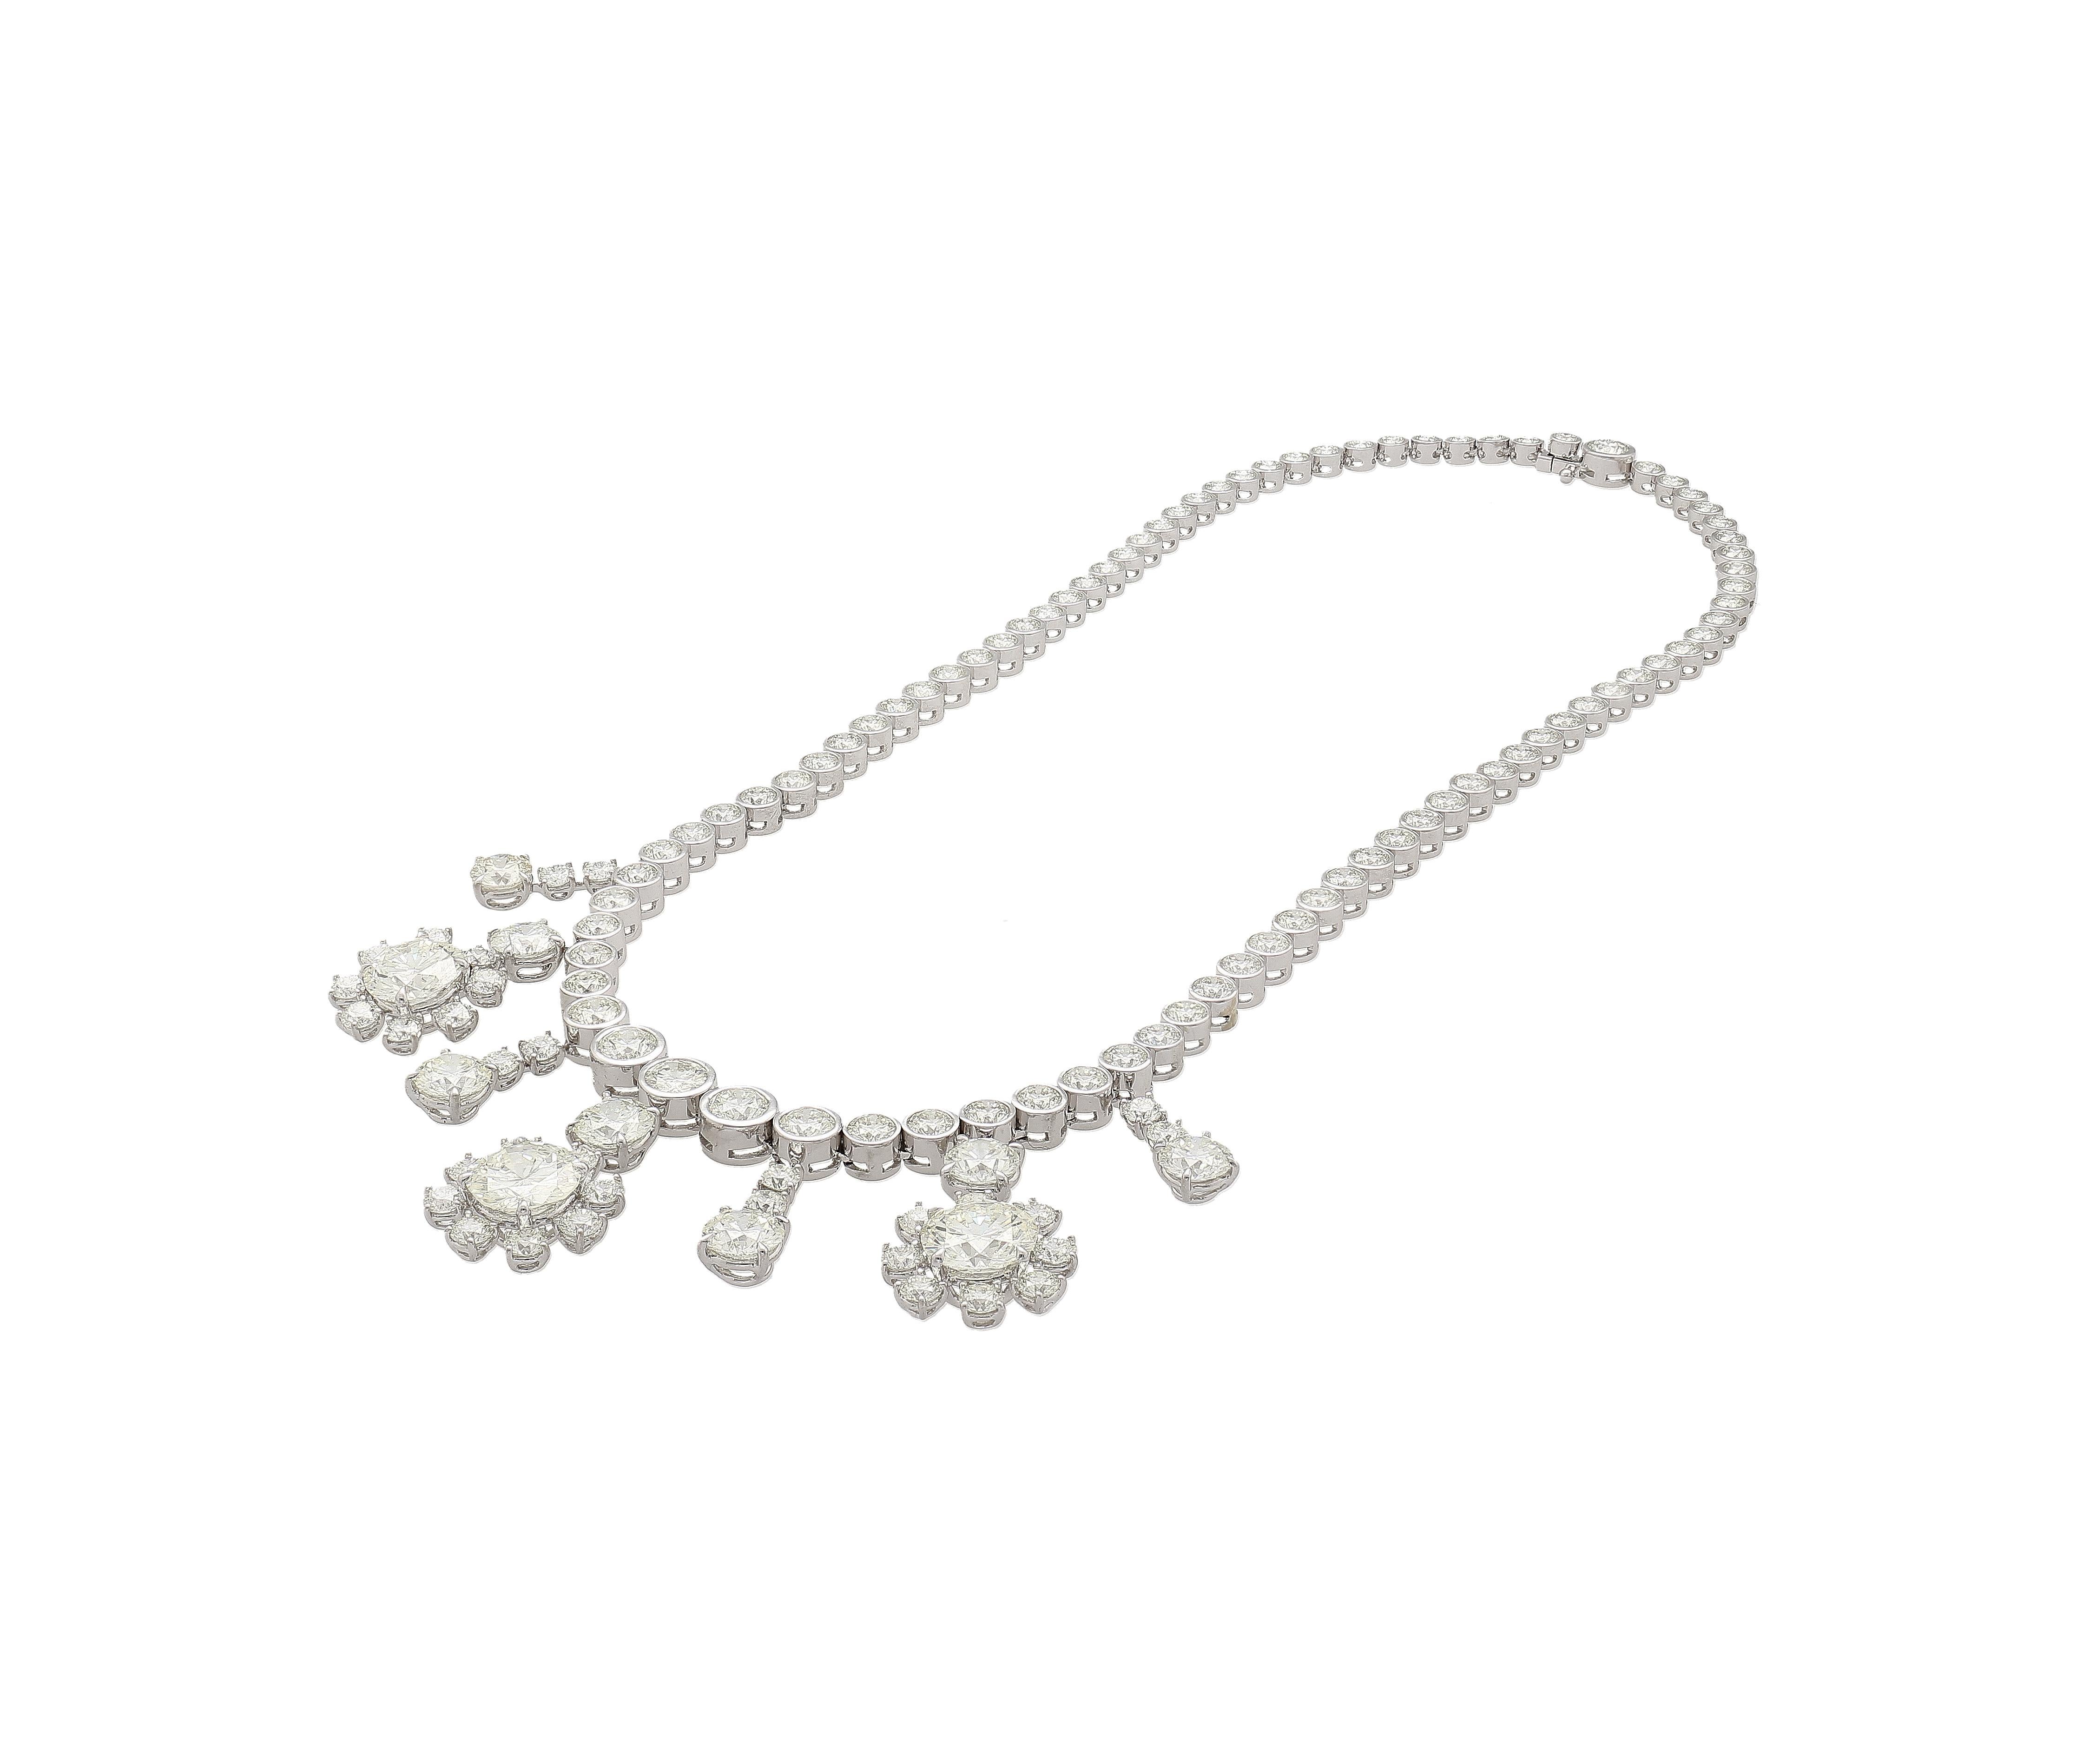 25 Carat Diamond Round-Brilliant Cut Necklace in 18K White Gold GIA Certified  In New Condition For Sale In Miami, FL